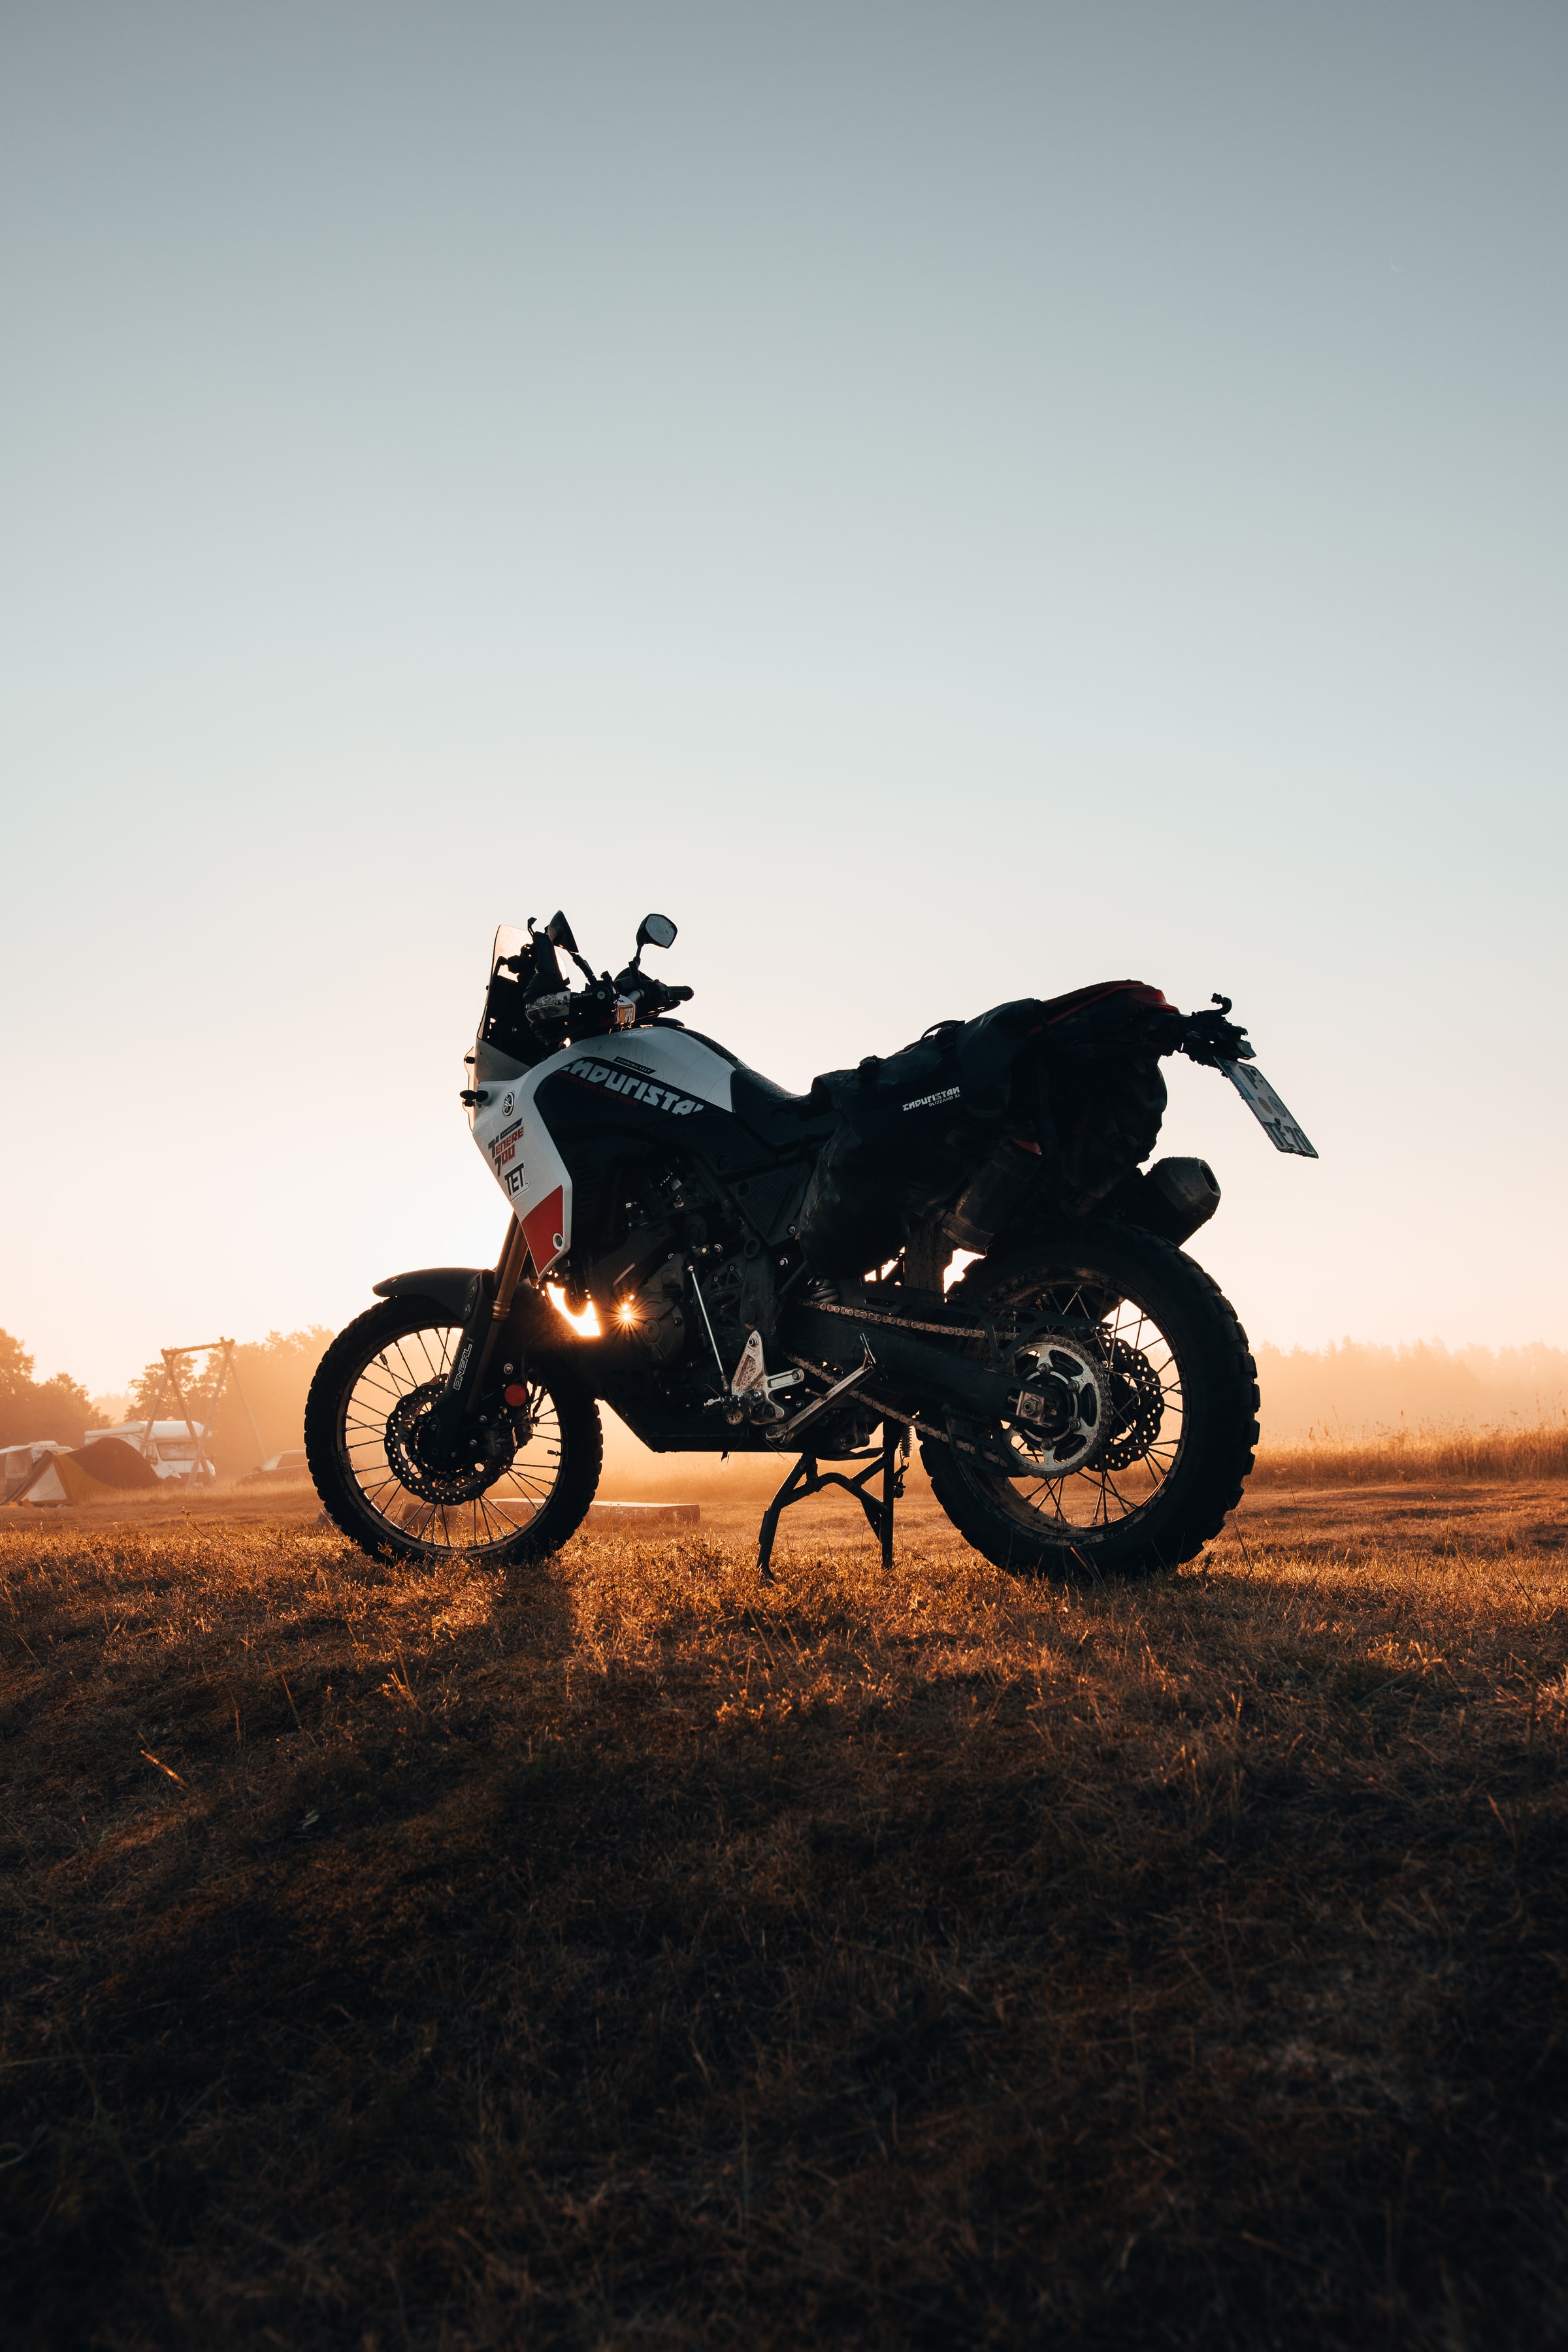 105502 descargar imagen motocicleta, motocicletas, vigas, rayos, vista lateral, perfil, bicicleta: fondos de pantalla y protectores de pantalla gratis